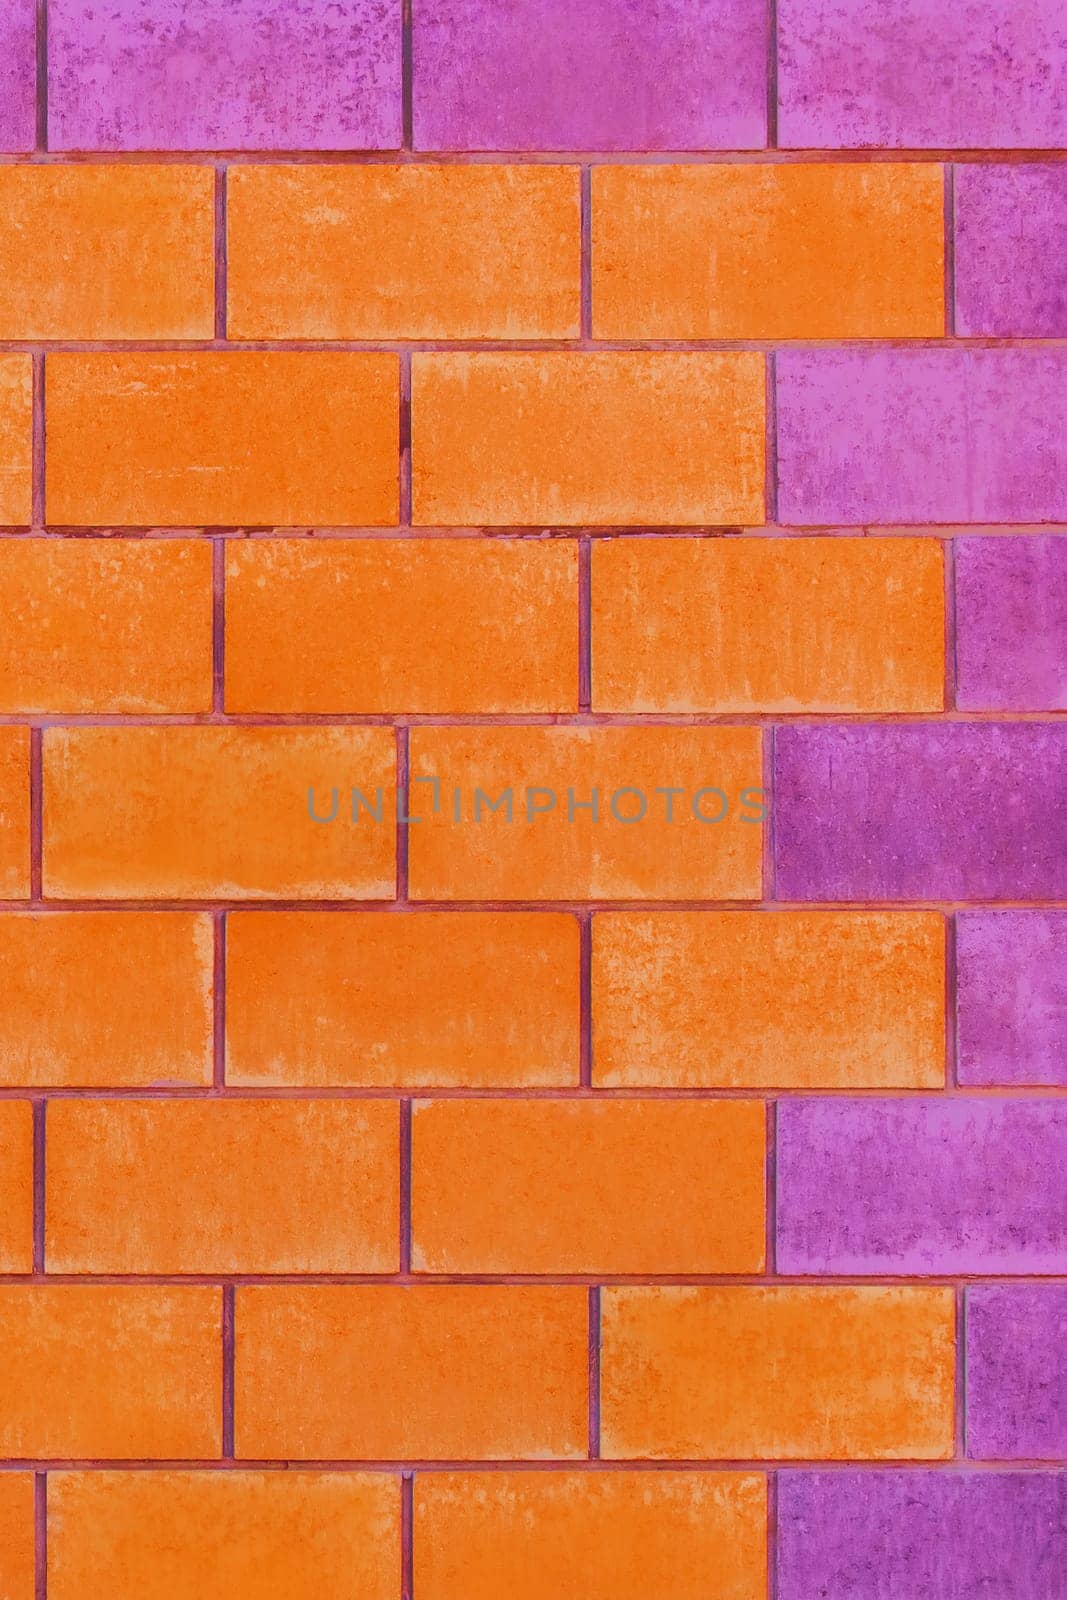 Orange and purple paint on brick blocks urban color vibrant design wall texture background architecture.